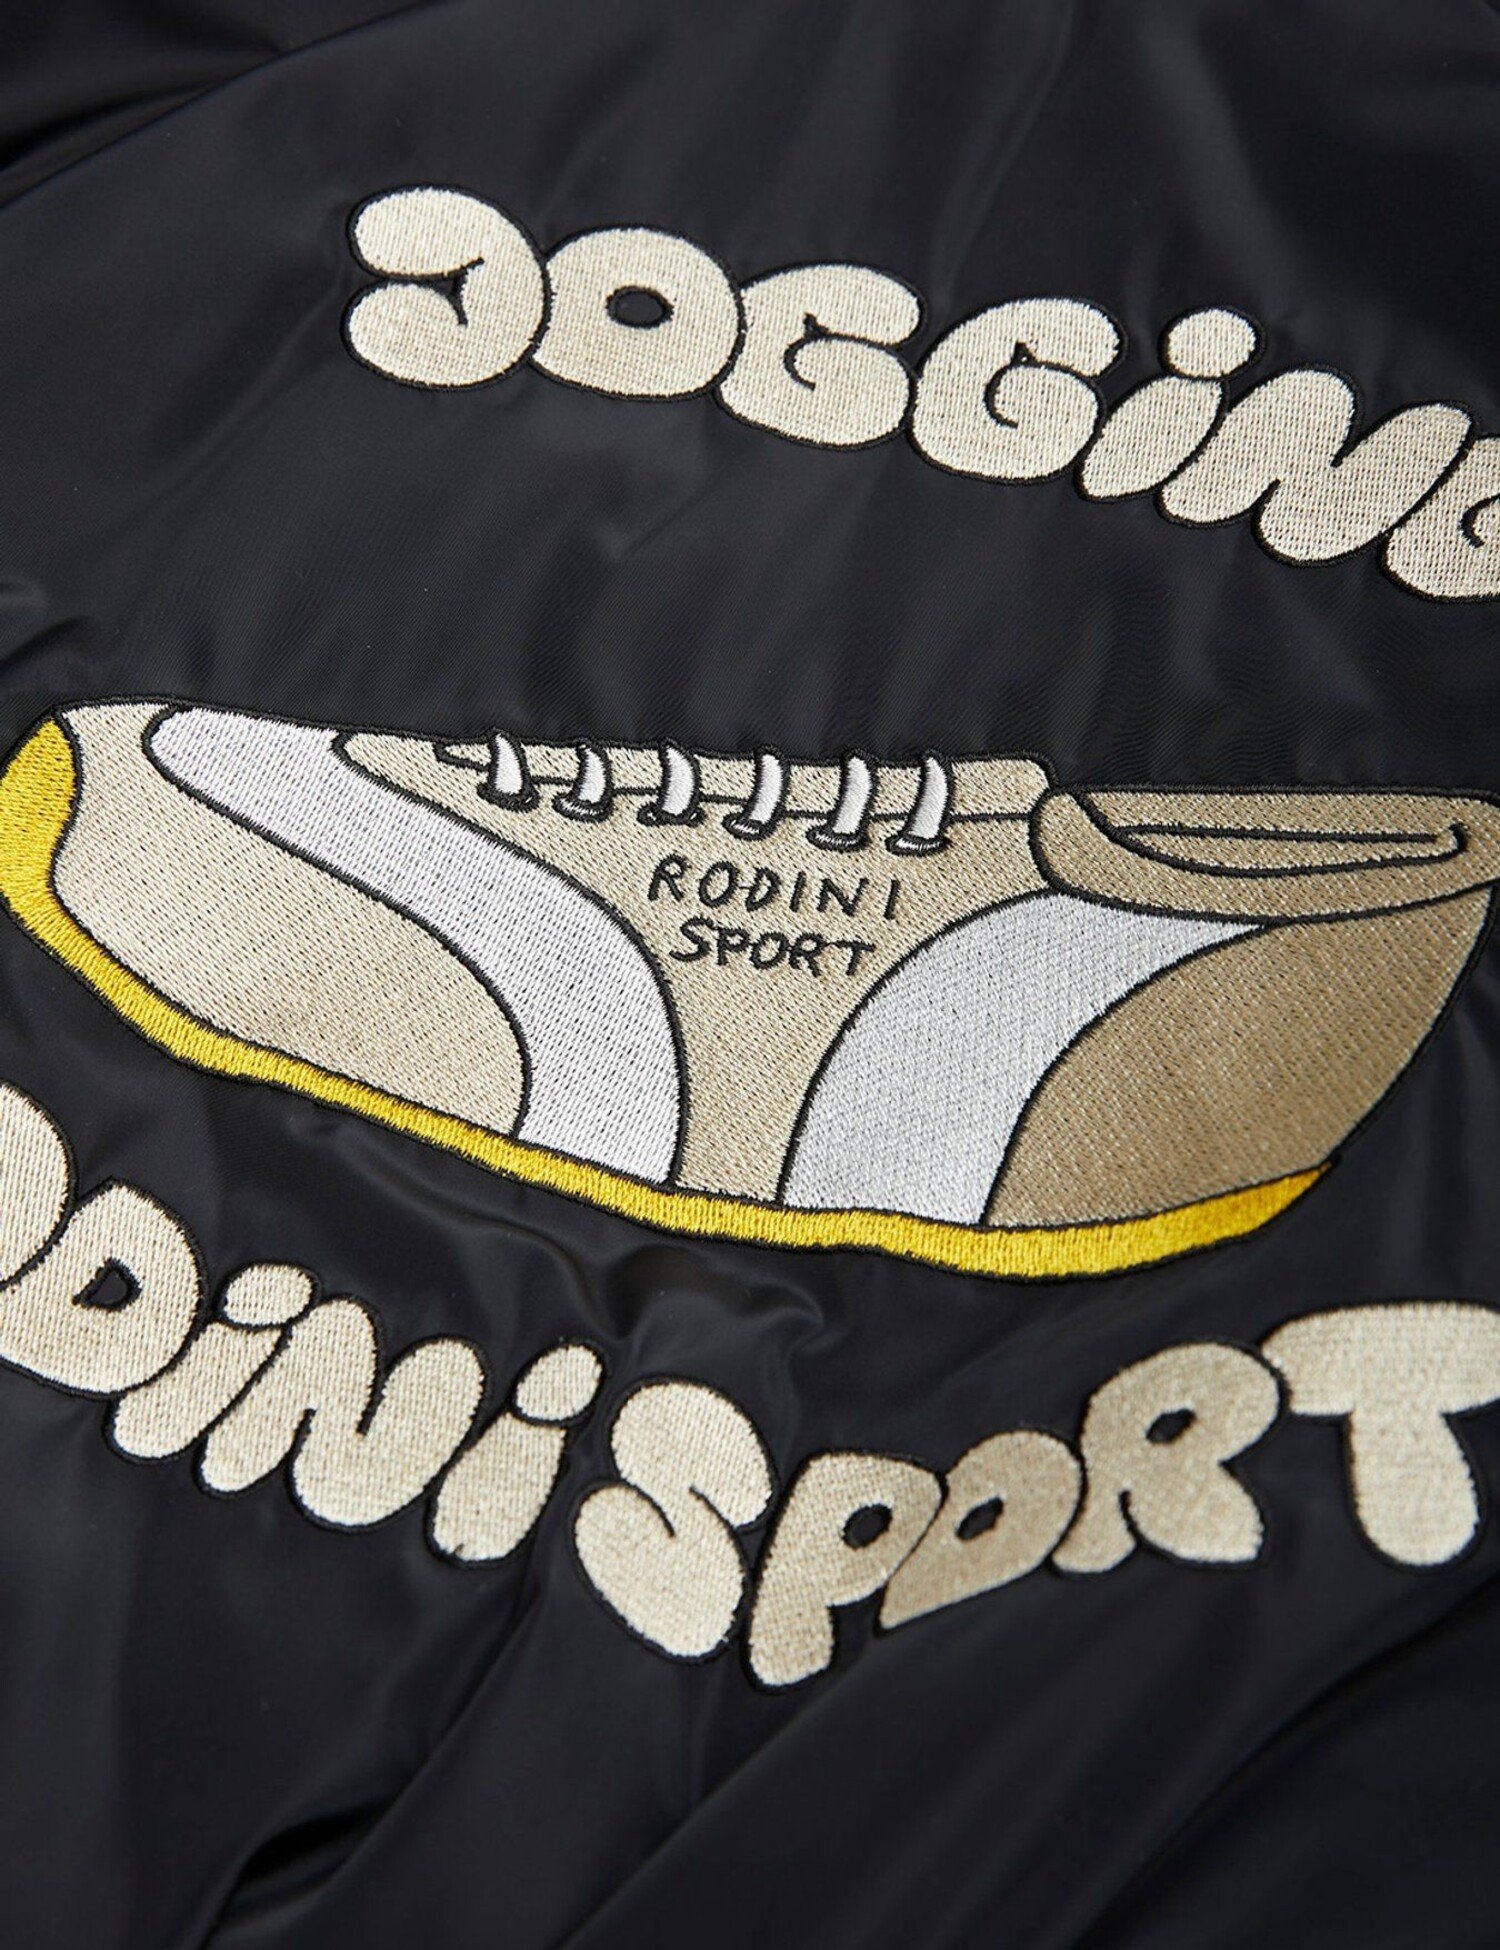 Mini Rodini logo-patch stripe-print jacket - Yellow